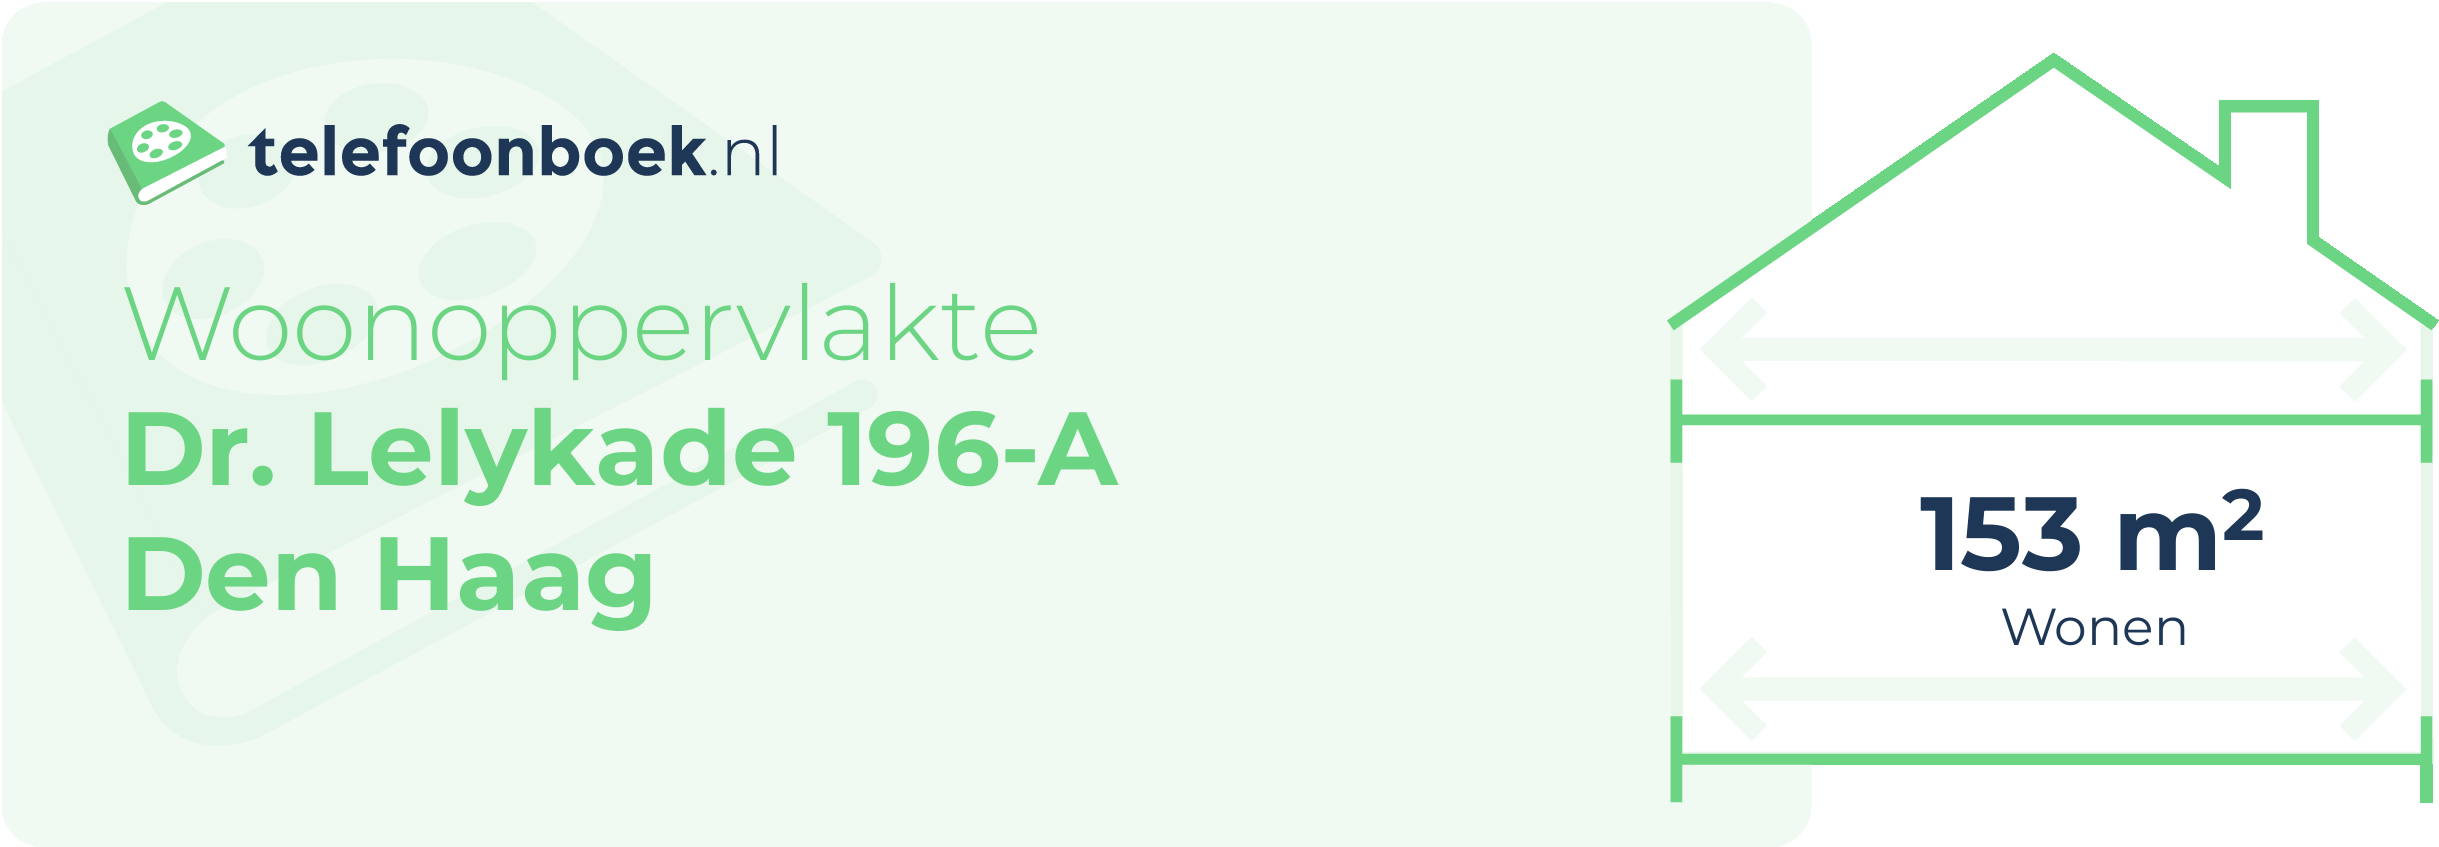 Woonoppervlakte Dr. Lelykade 196-A Den Haag